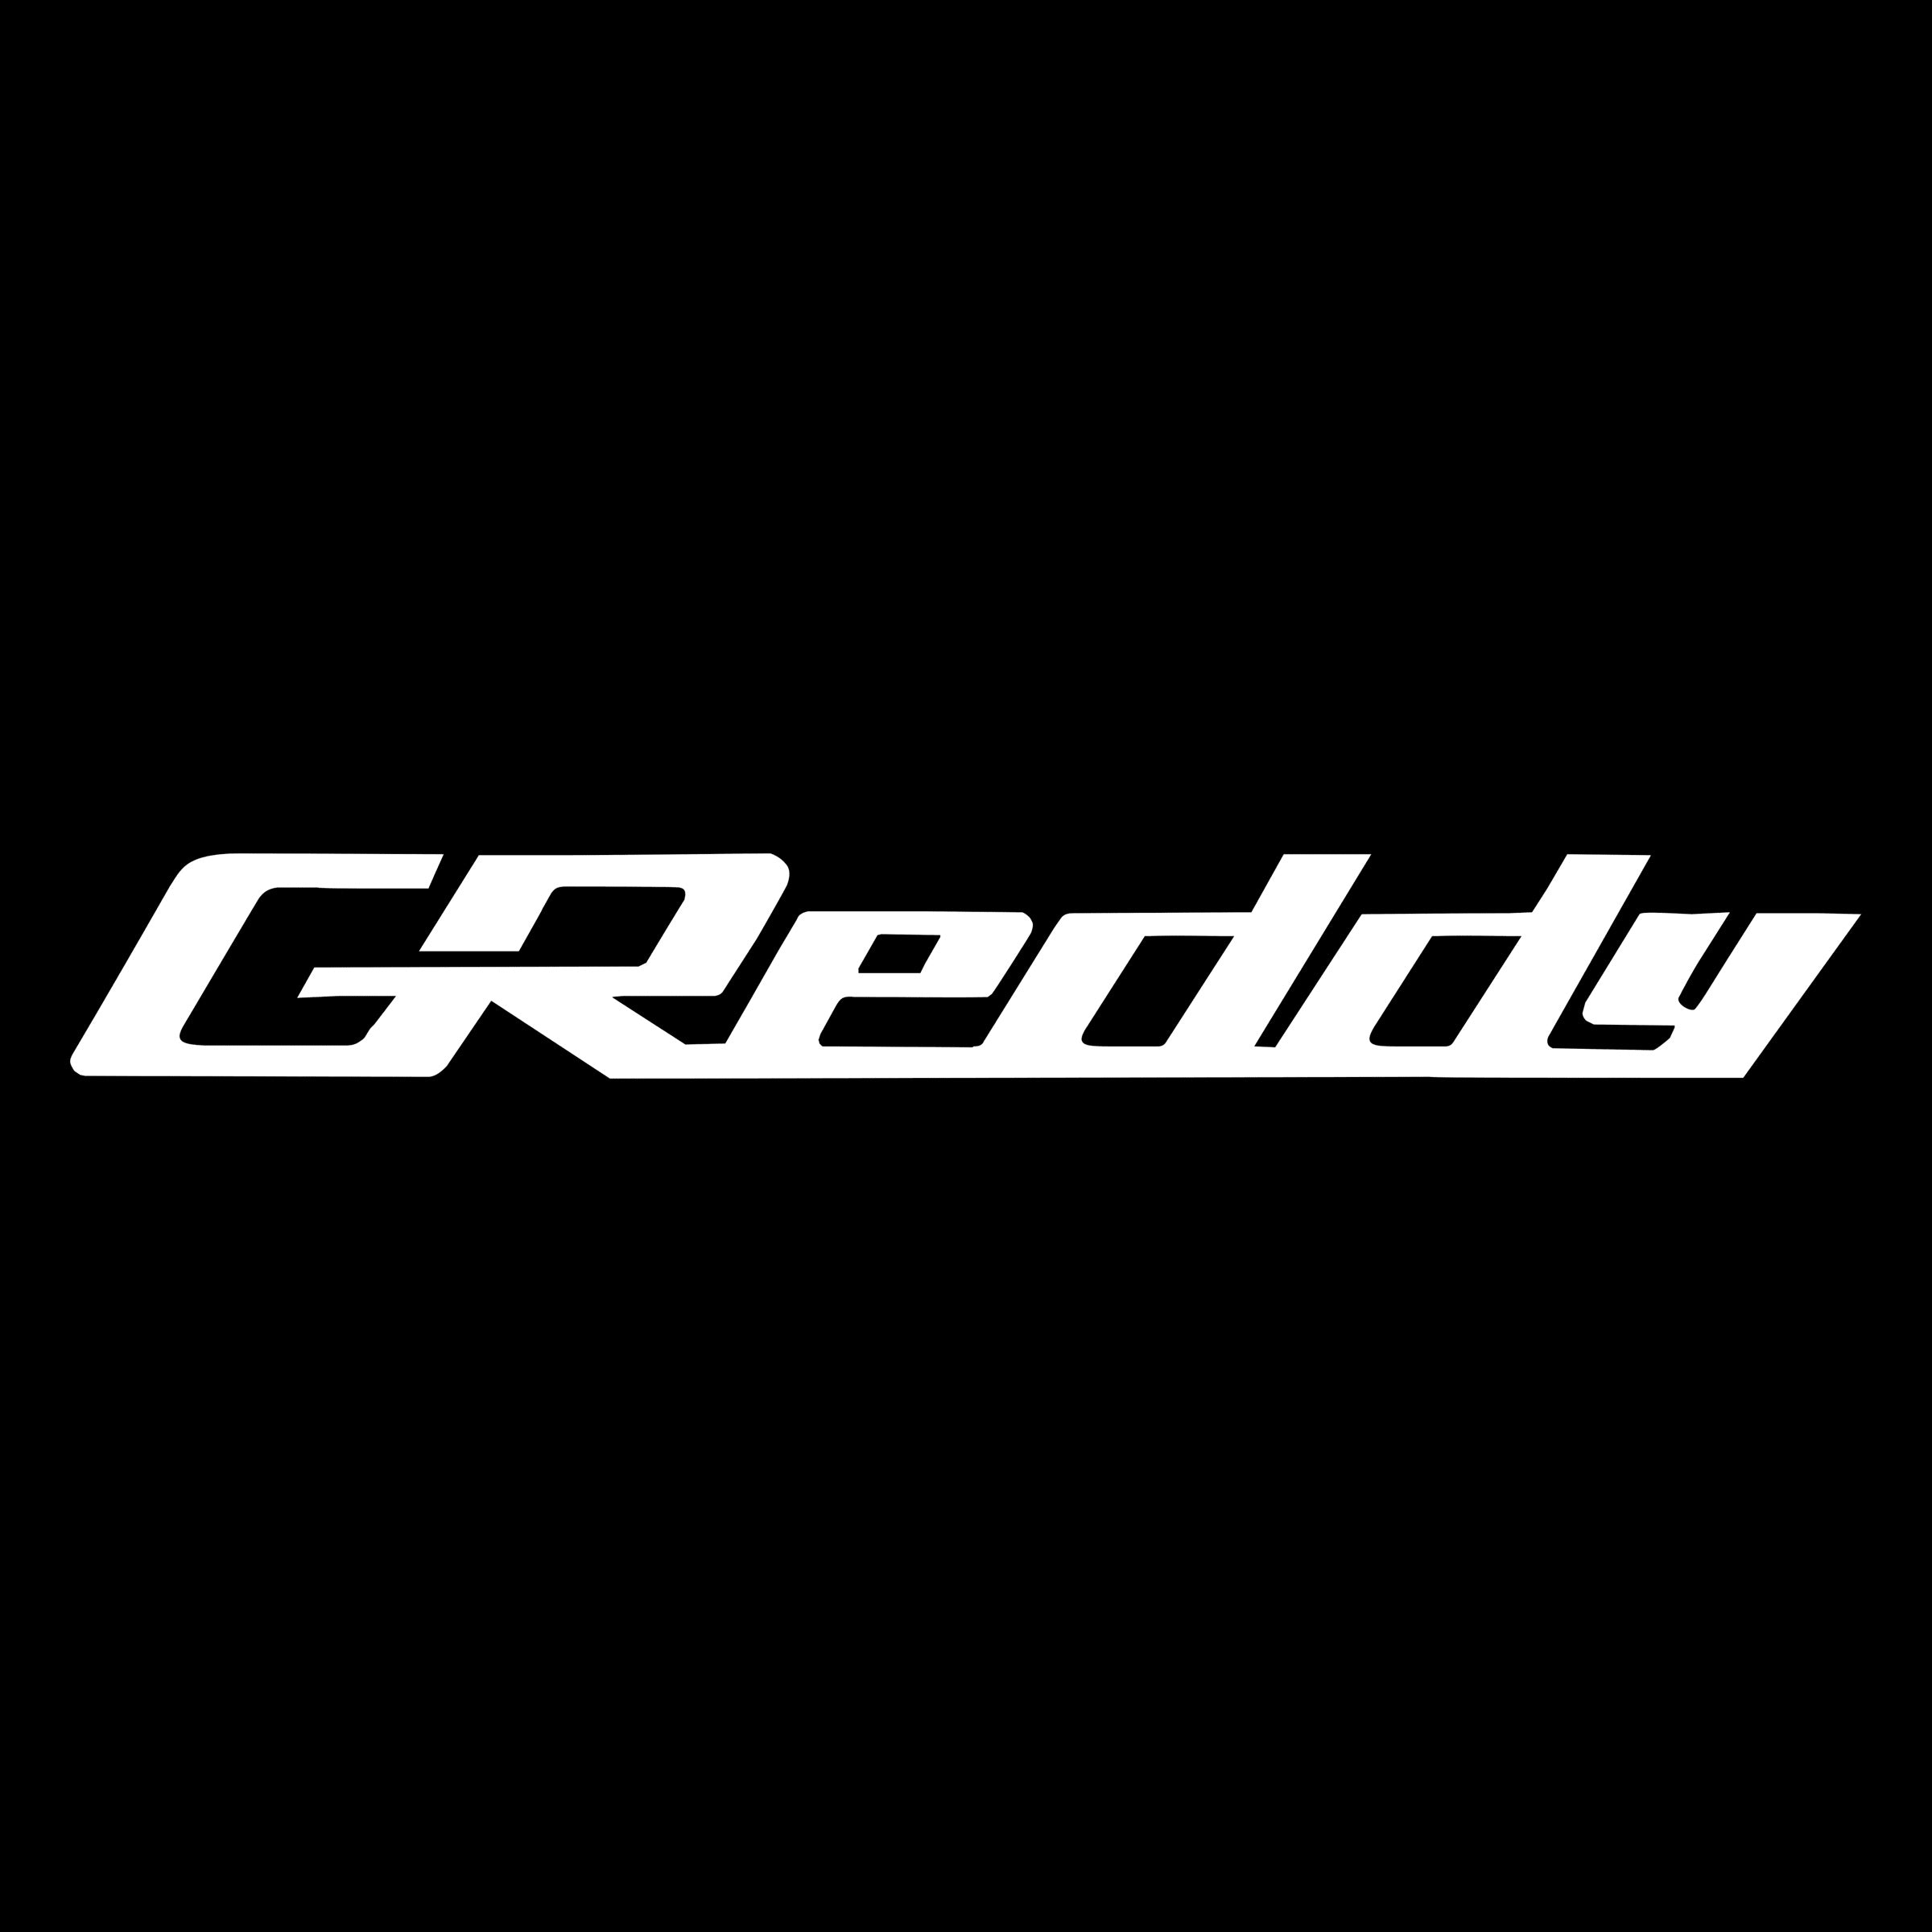 Greddy Logo in white with black background